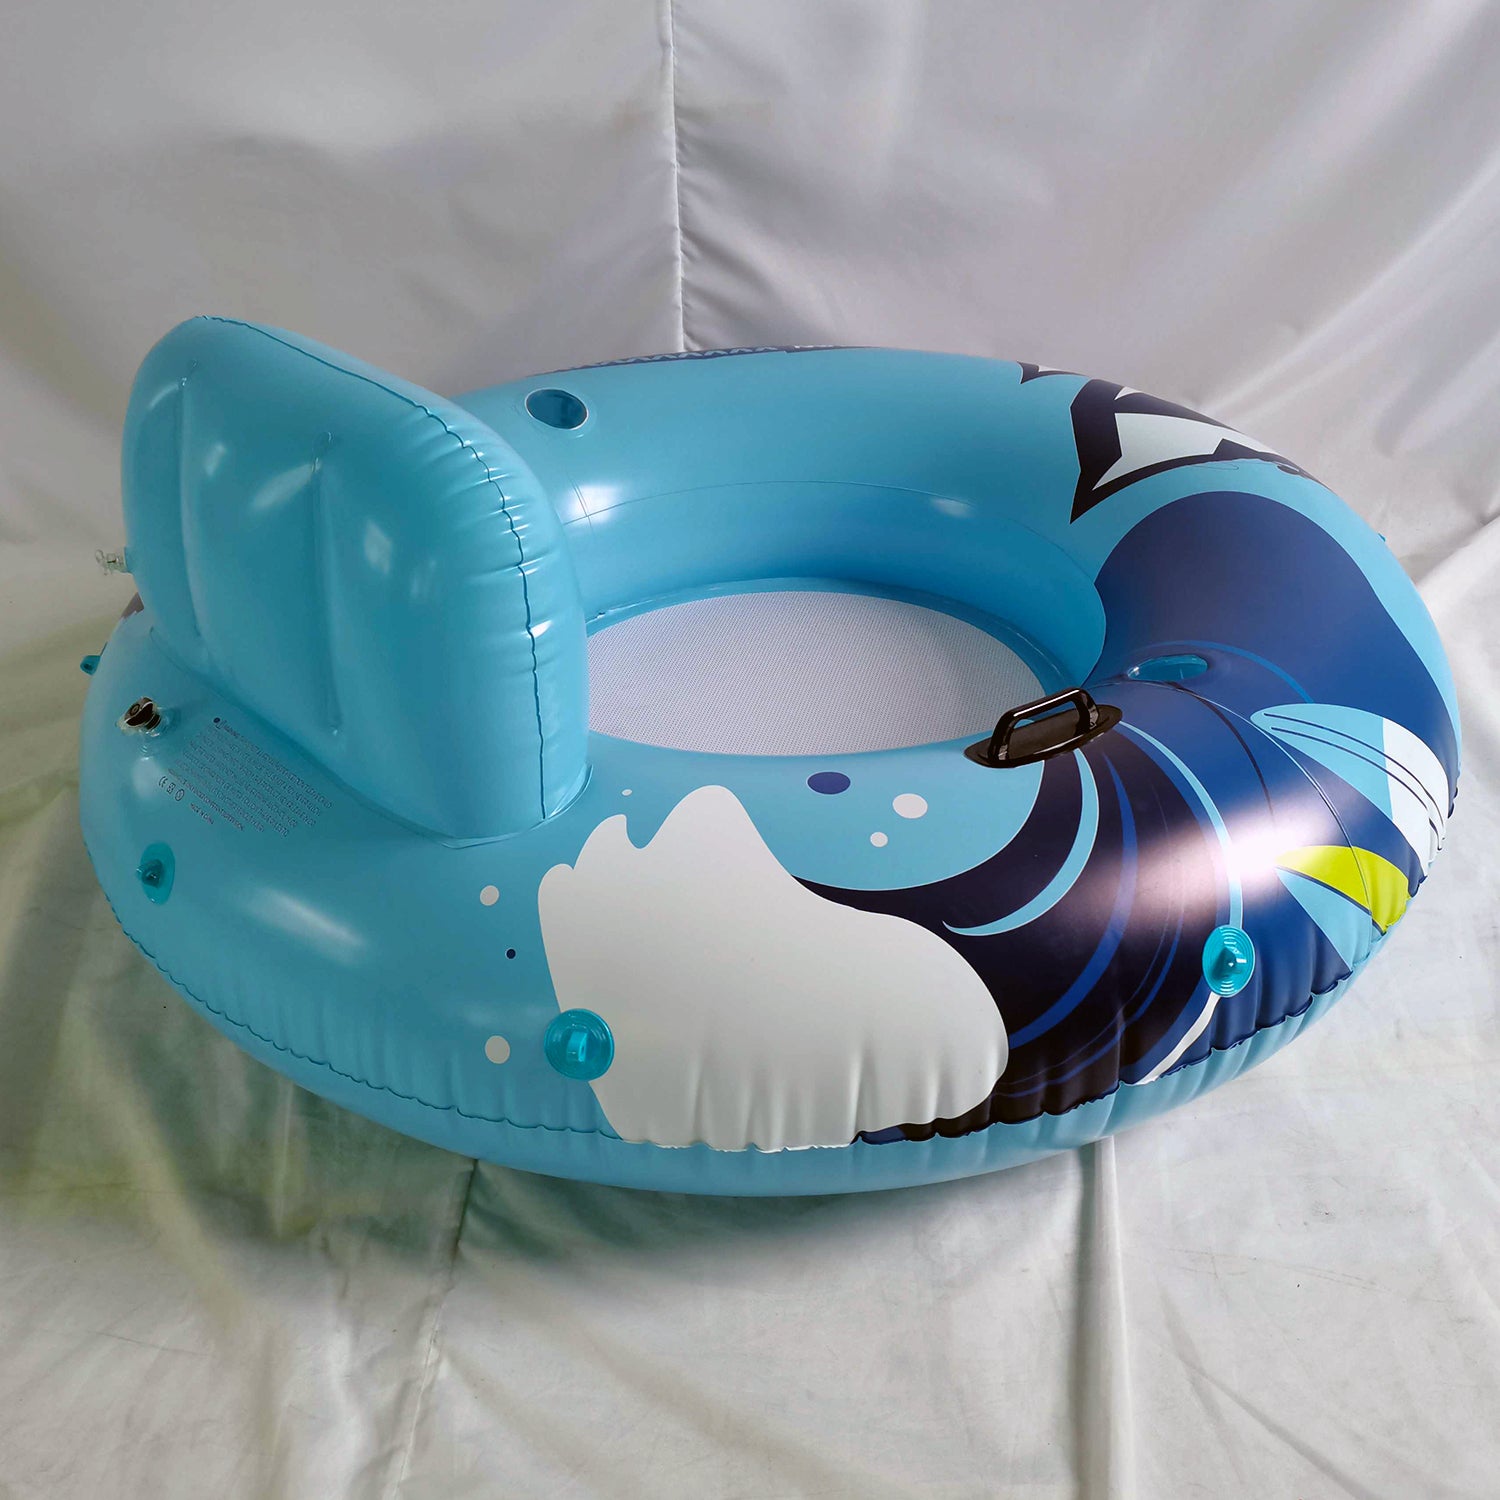 Custom 53" River Tube Inflatable